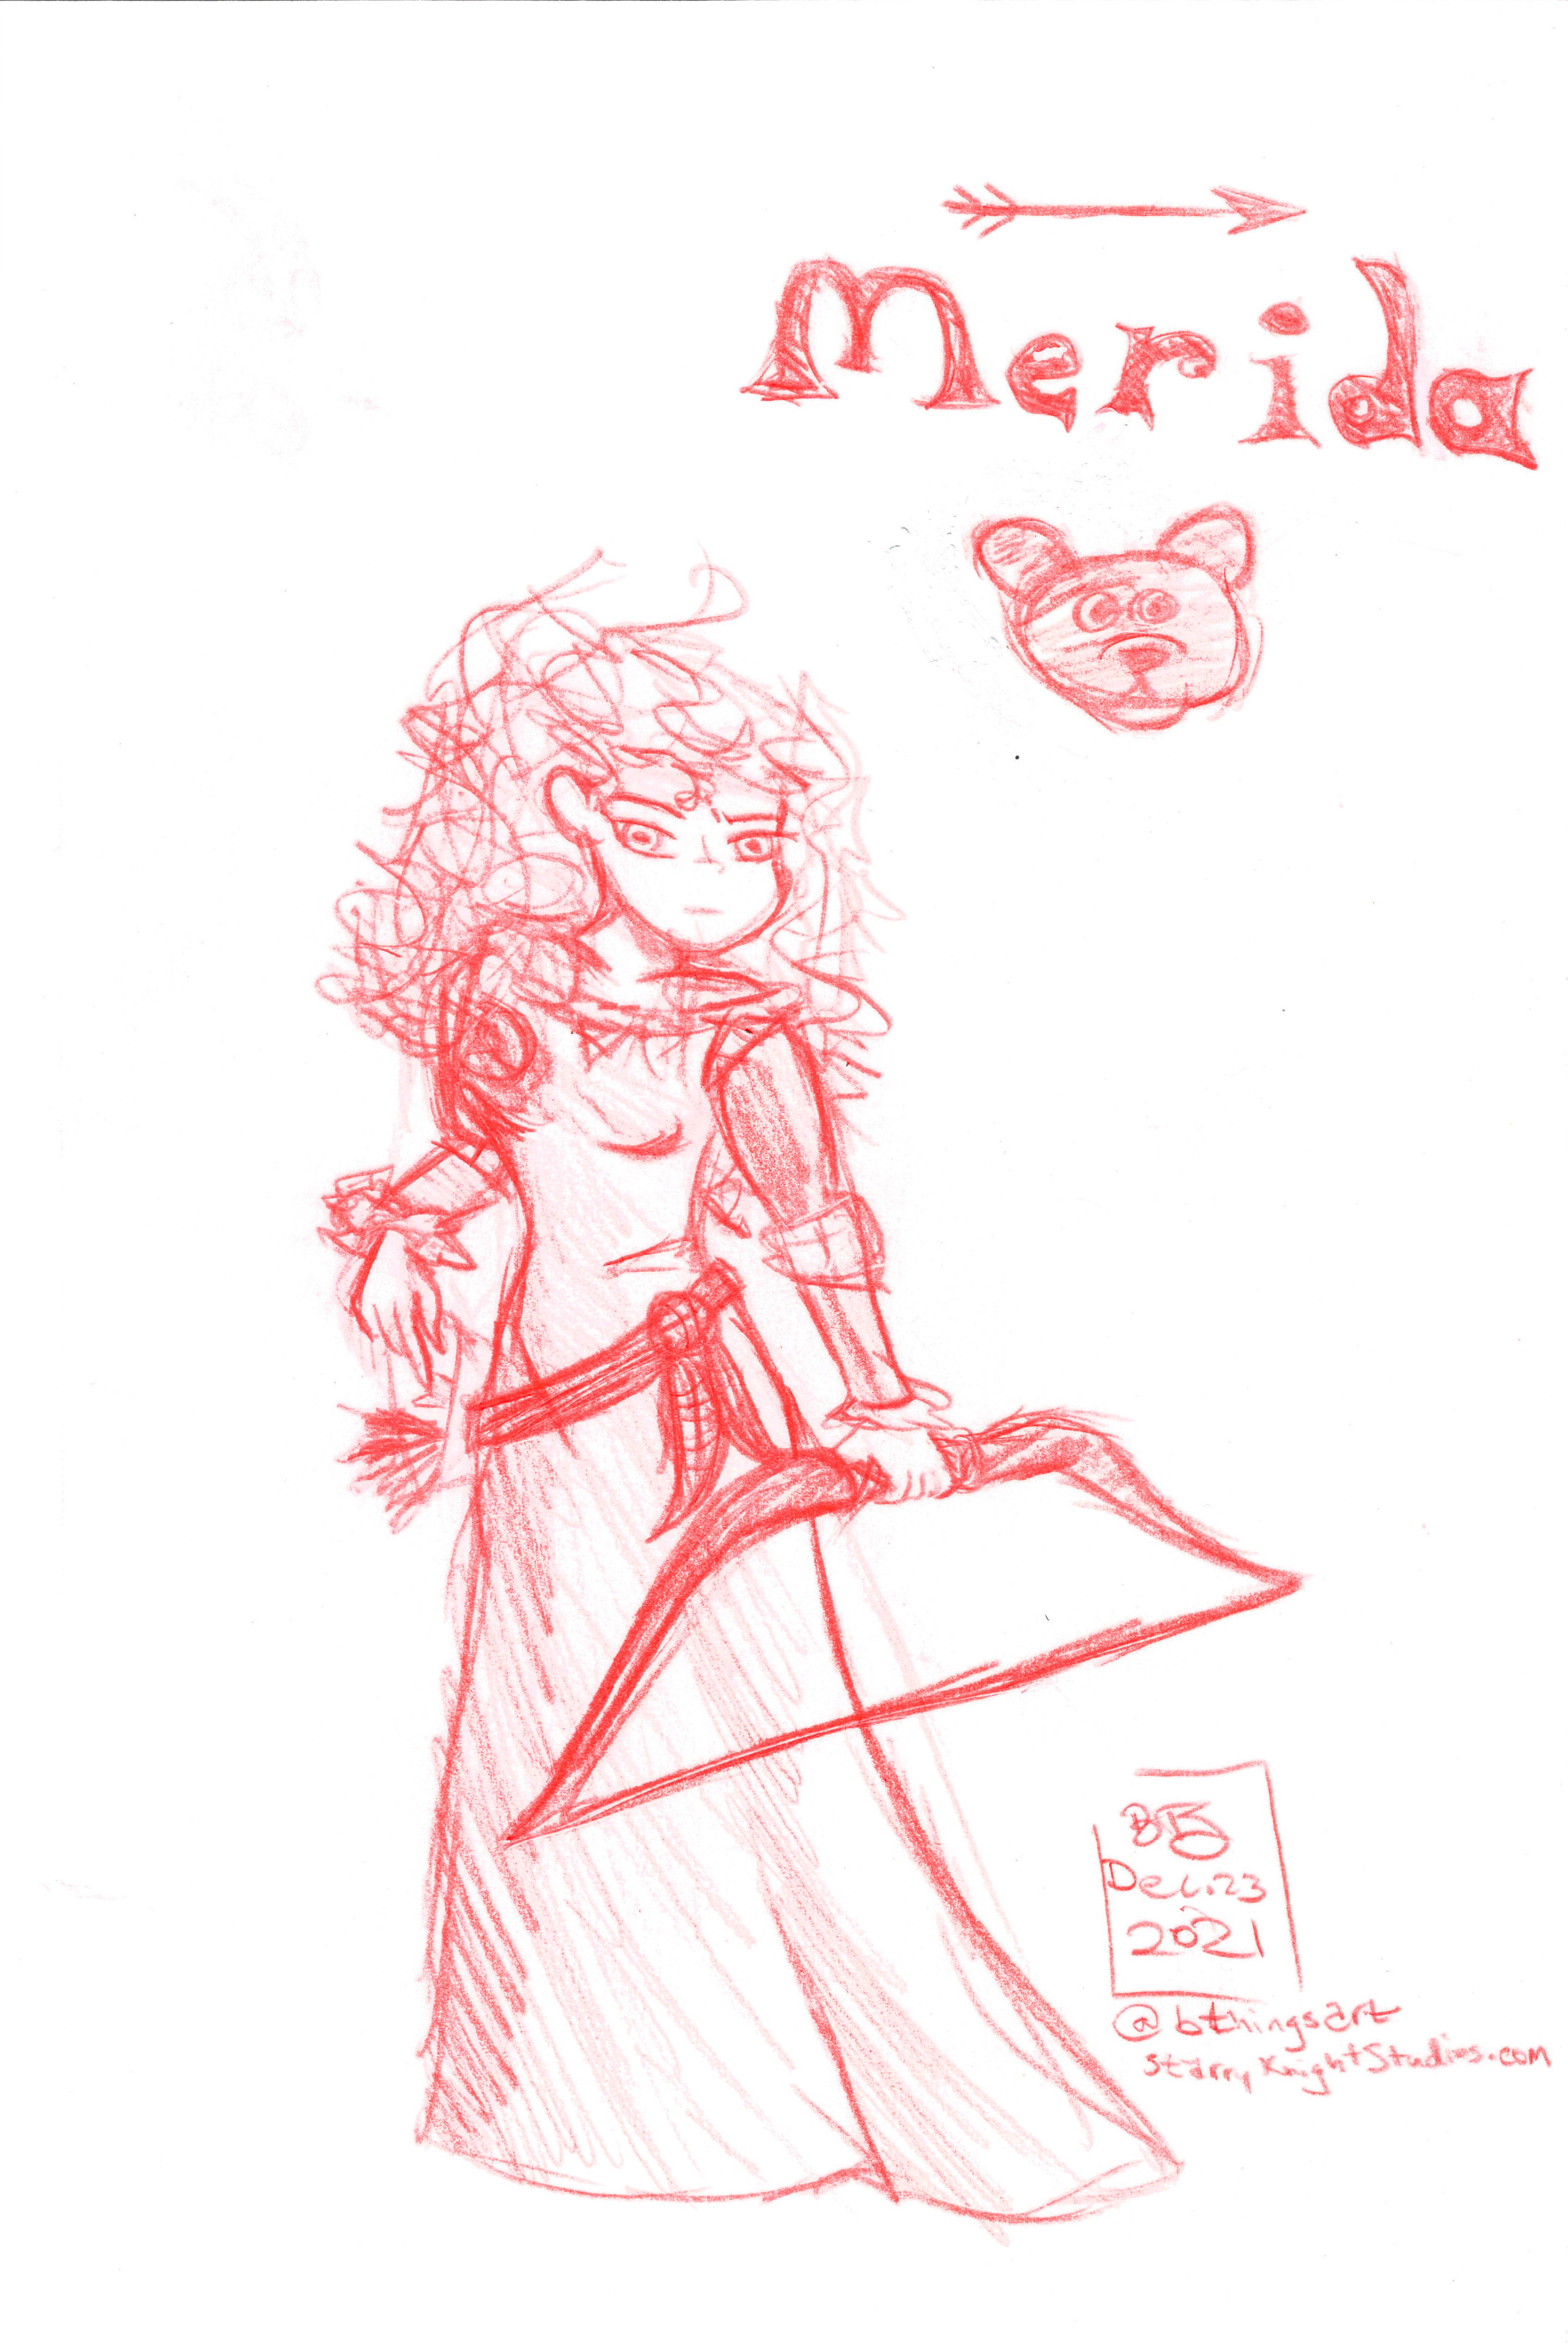 Merida (Inspired by Disney/Pixar's Brave); Red Pencil on Paper, December 2021